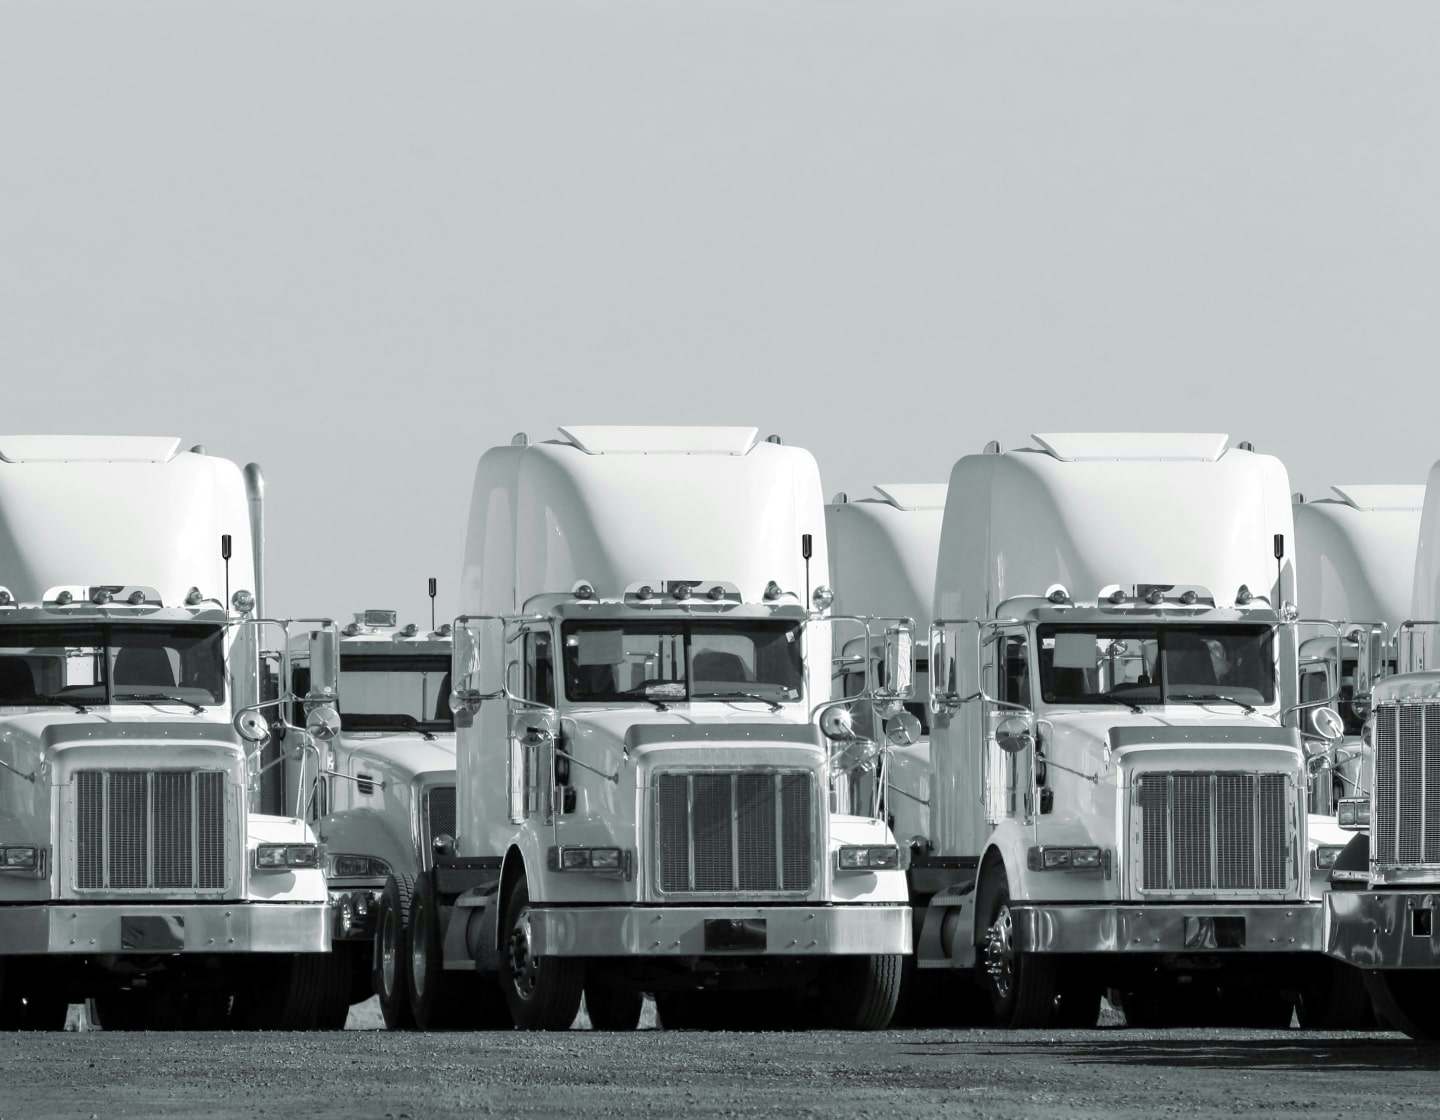 fleet of semi trucks